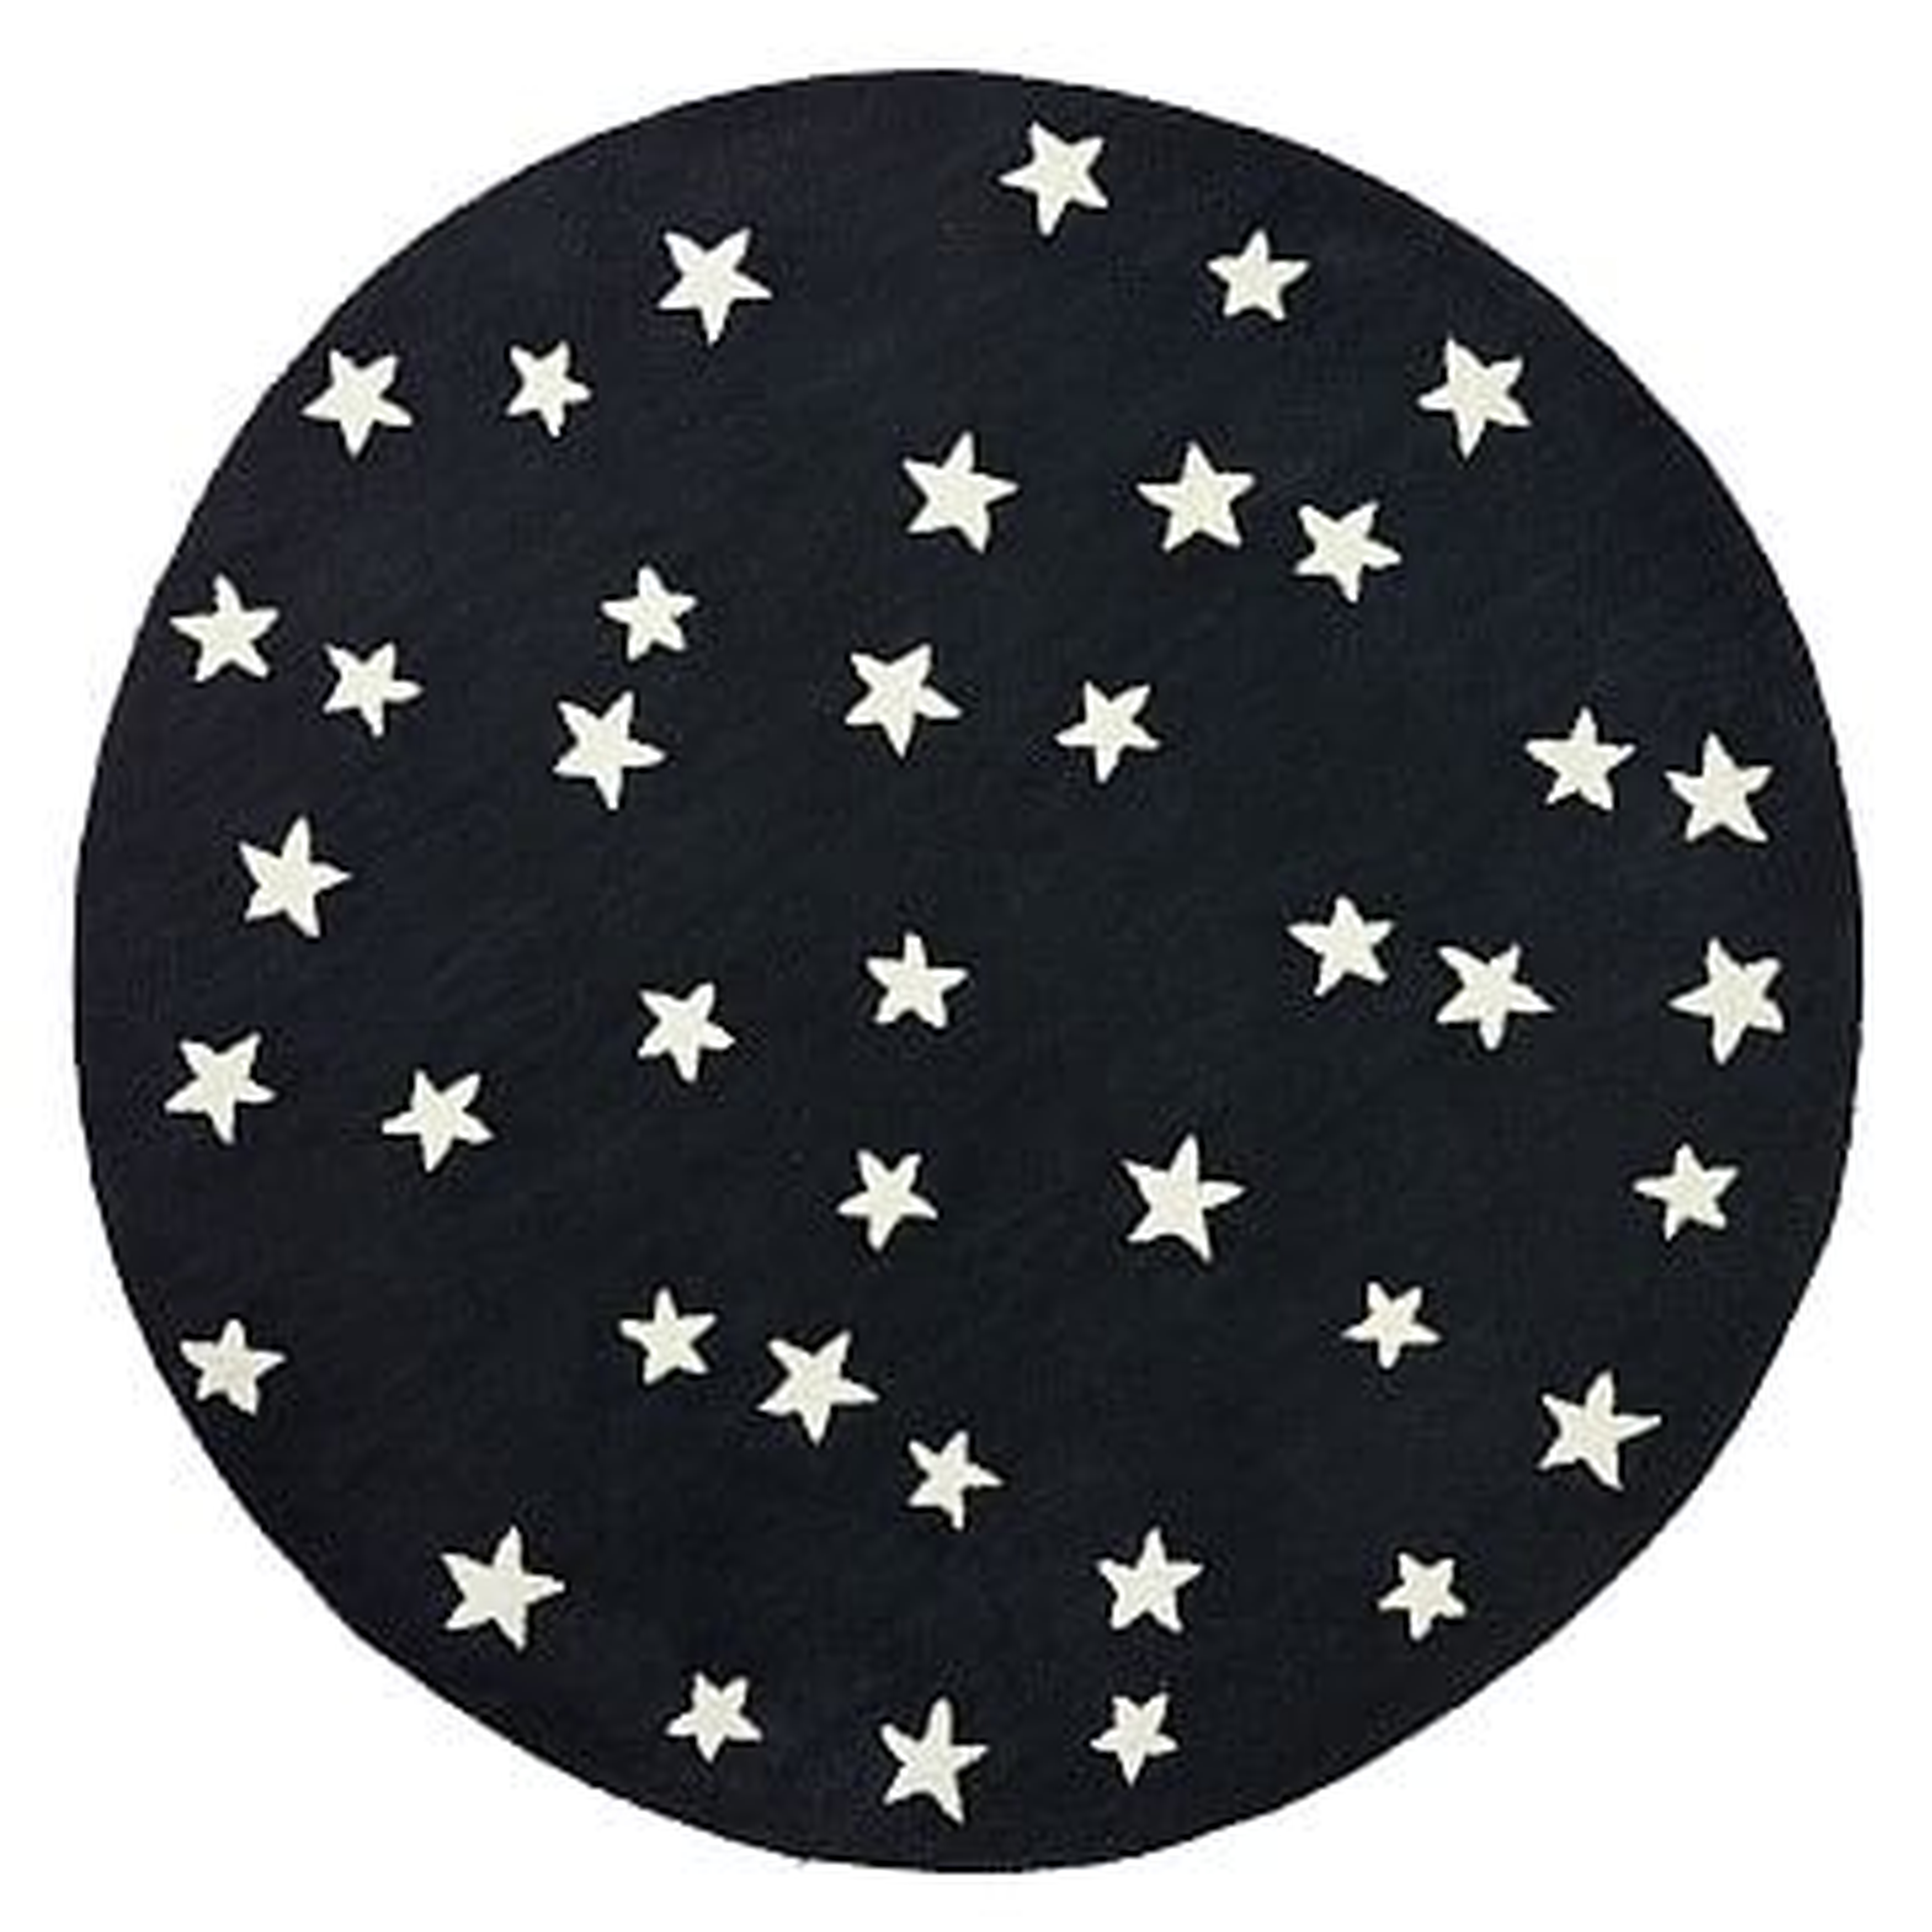 Starry Skies Rug, 5Ft Round, White Stars/Black, WE Kids - West Elm